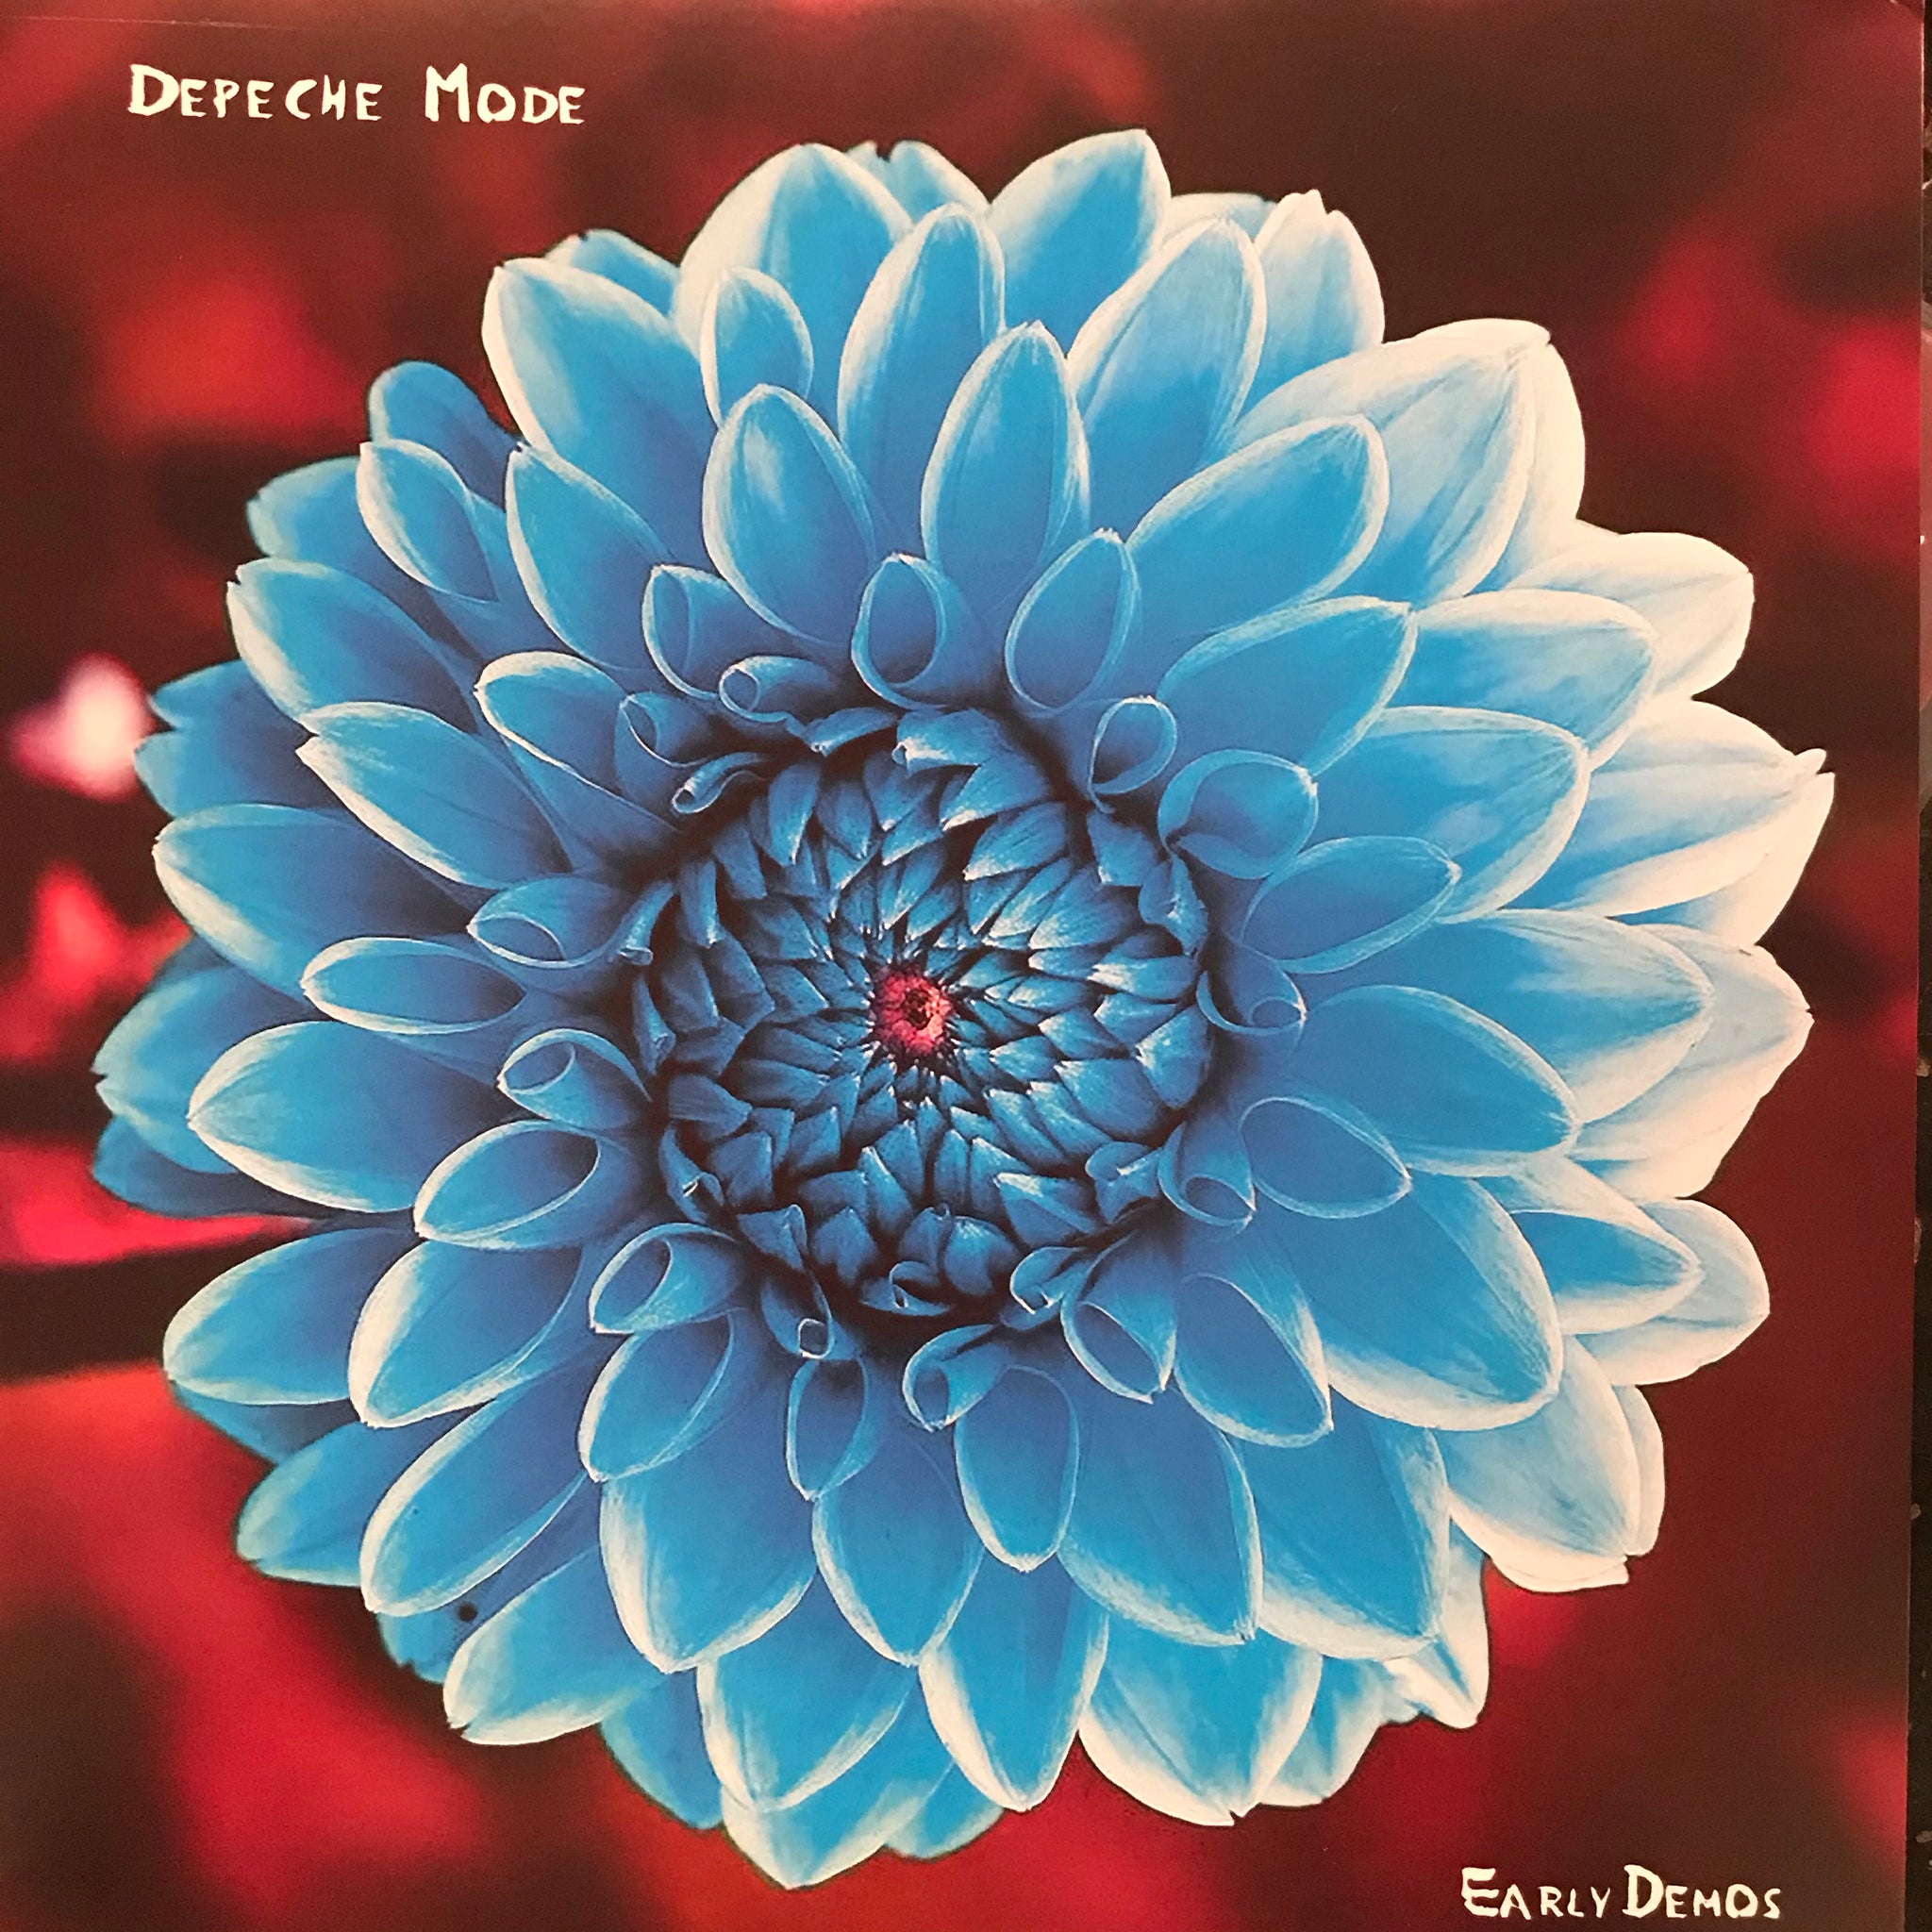 DEPECHE MODE - EARLY DEMOS Vinyl LP